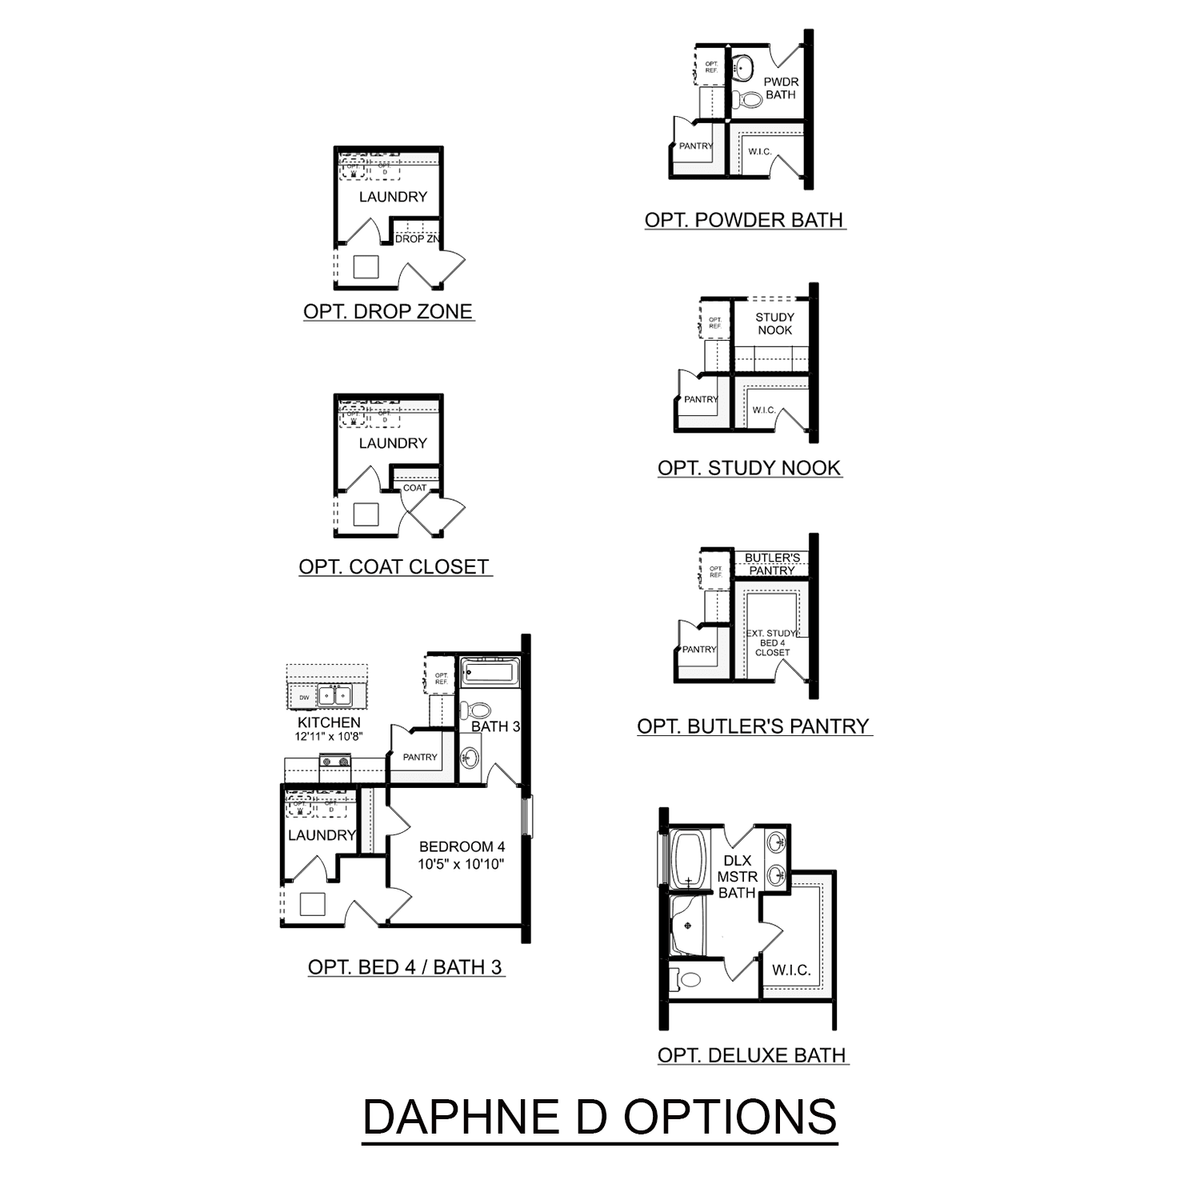 2 - The Daphne D floor plan layout for 27324 Mckenna Drive in Davidson Homes' Mallard Landing community.